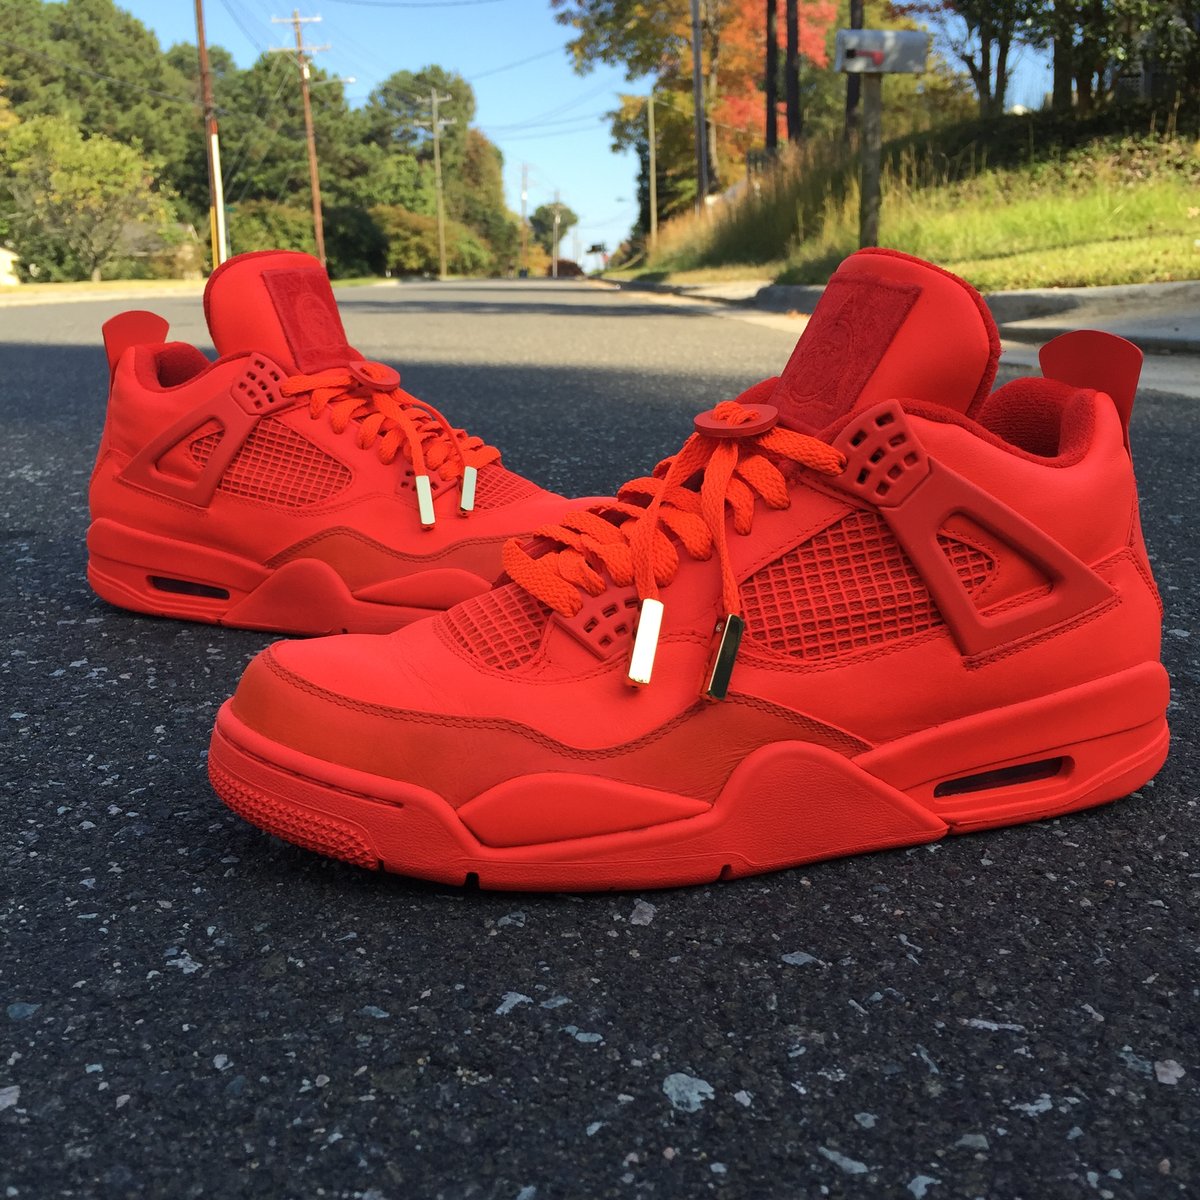 Red October Jordan 4